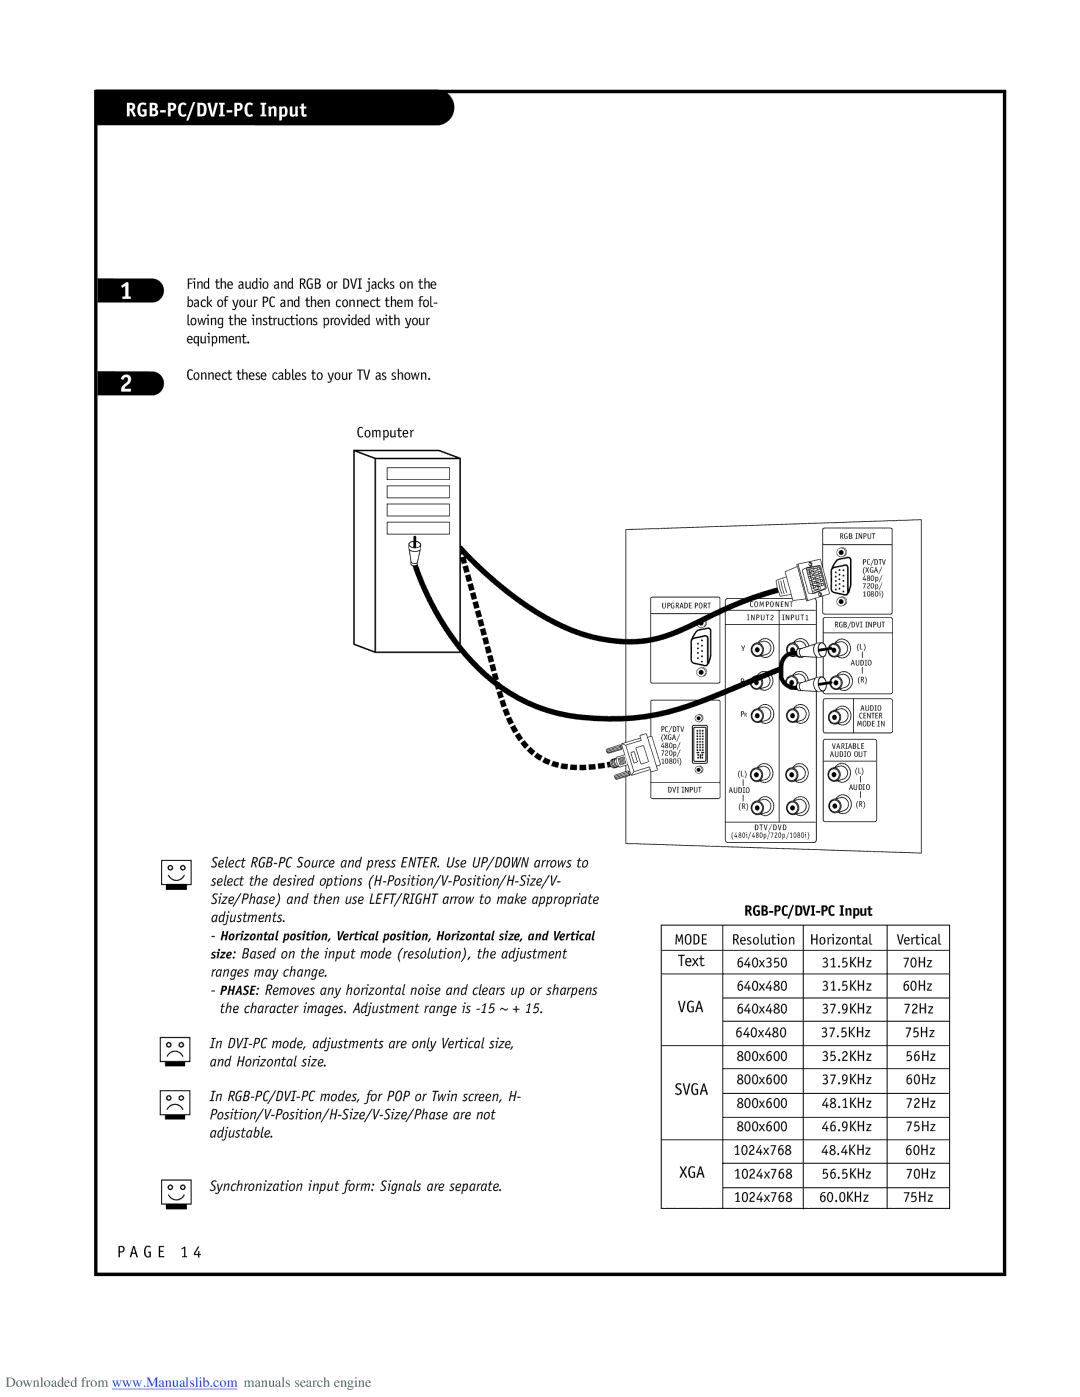 LG Electronics ru-44sz80l owner manual RGB-PC/DVI-PC Input 